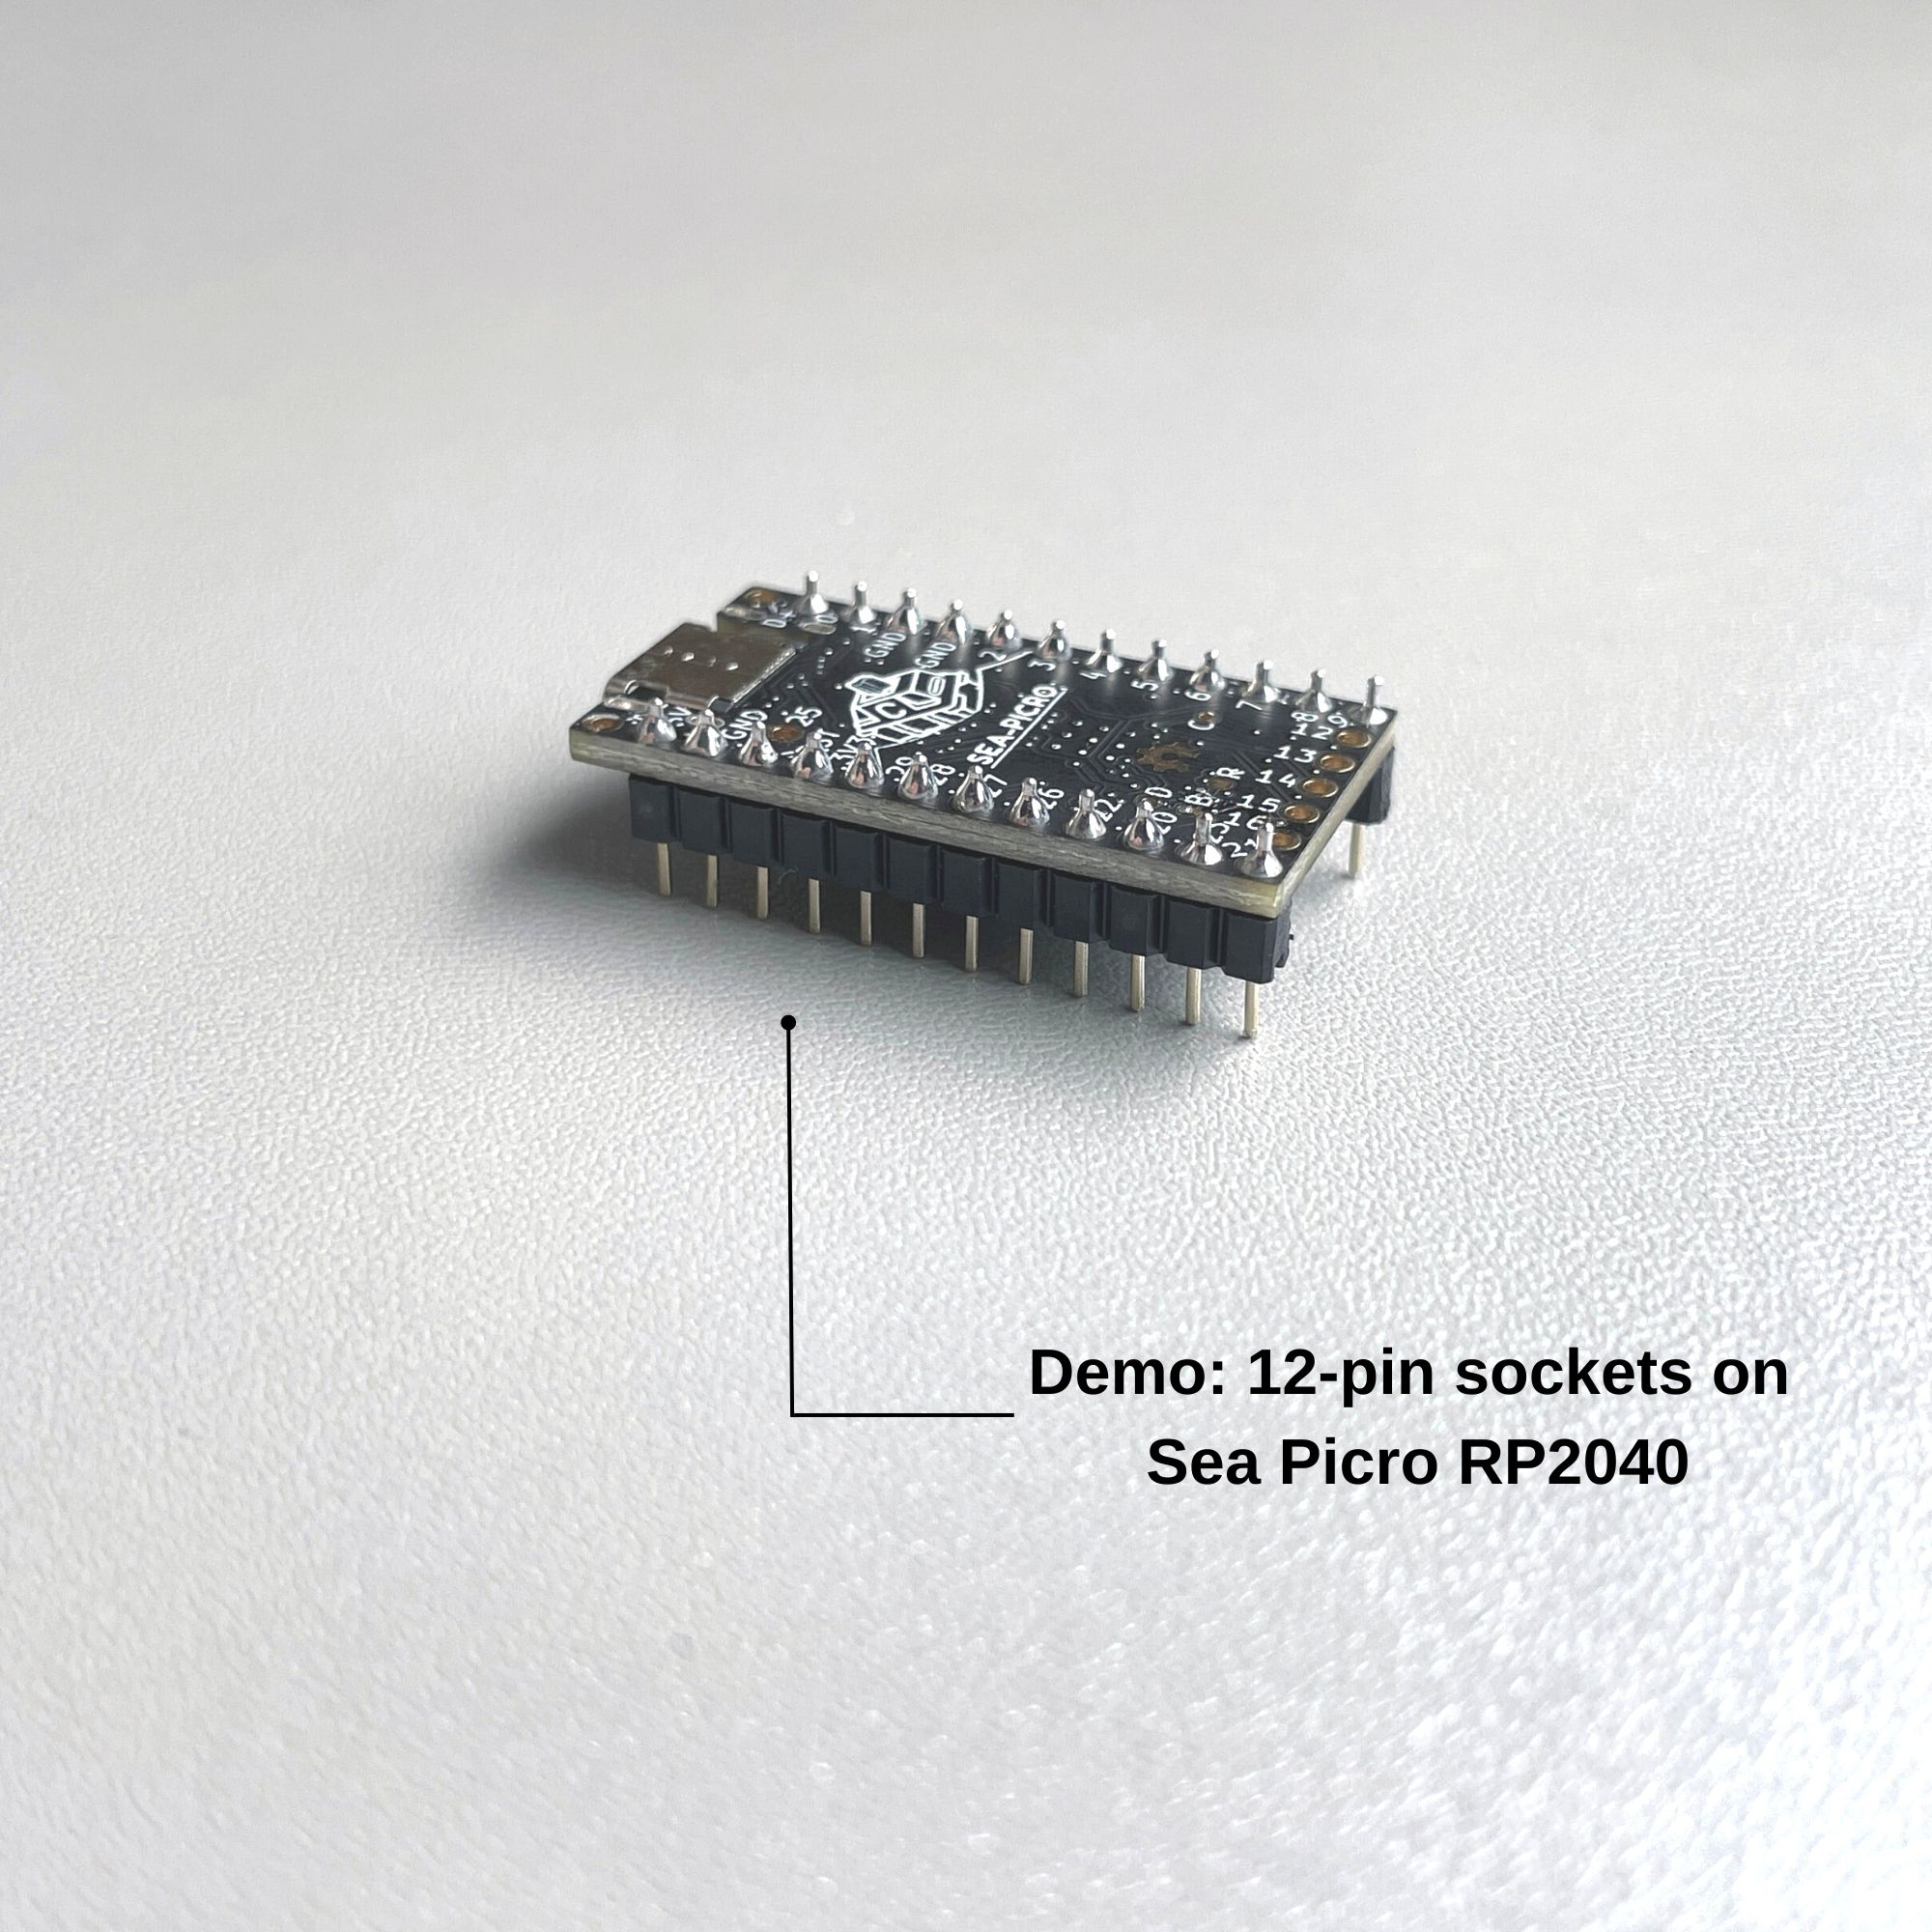 MCU sockets on Sea Picro RP2040